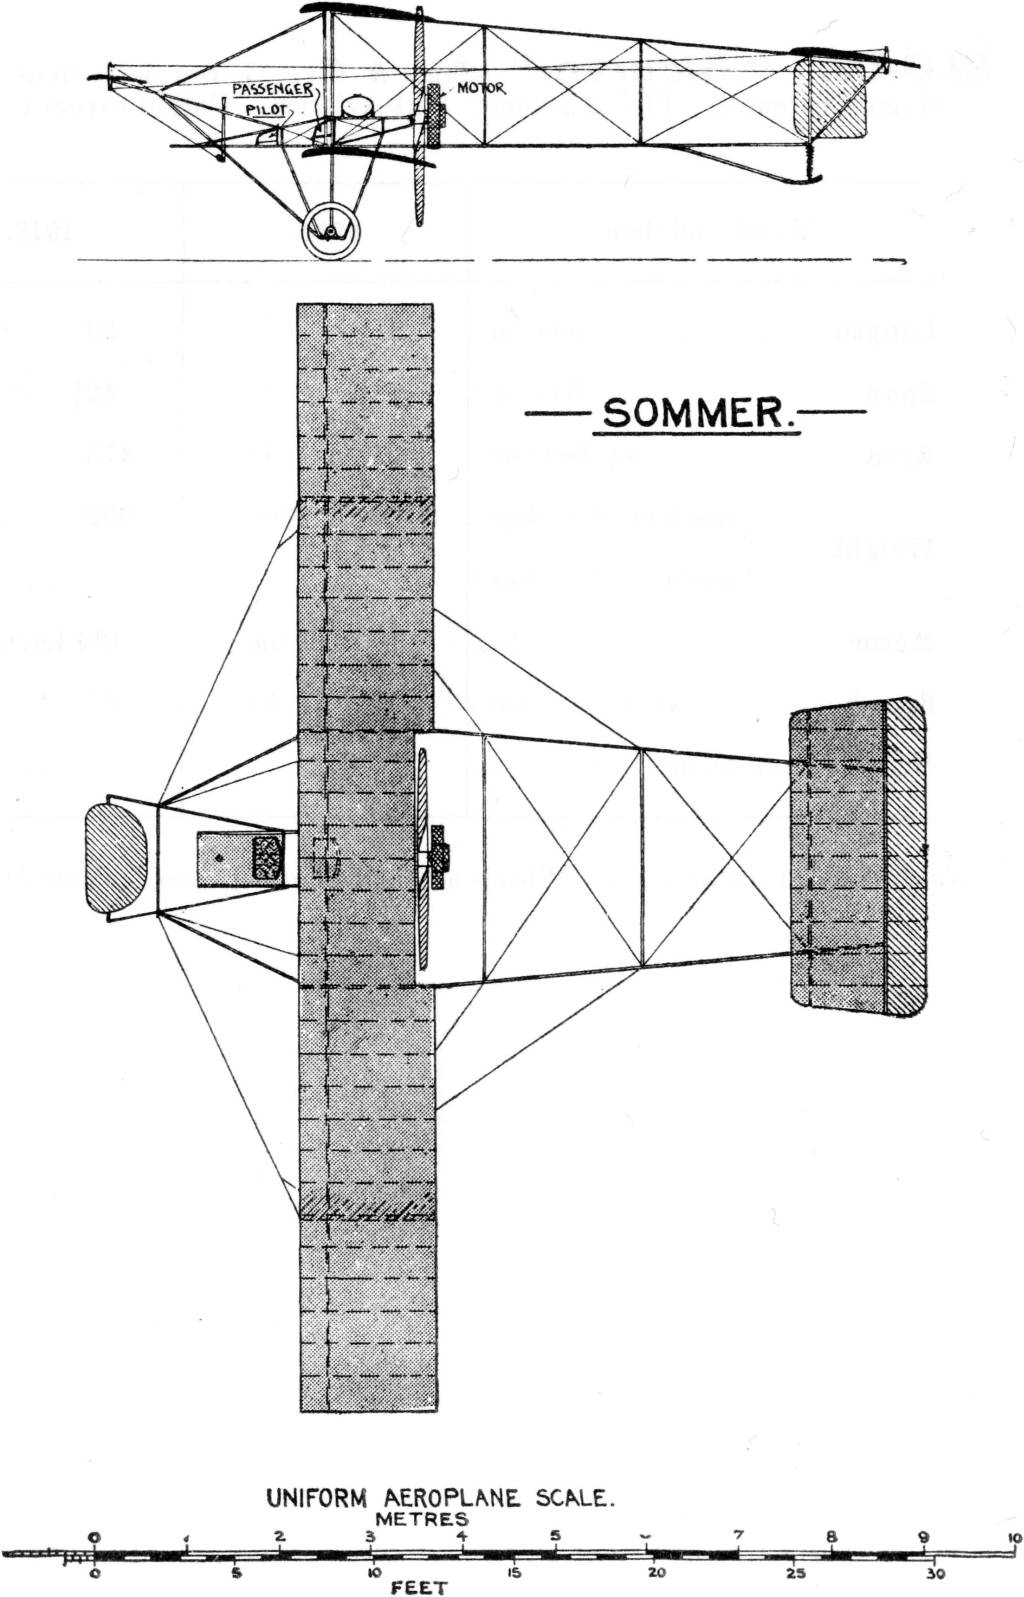 SOMMER. Uniform Aeroplane Scale